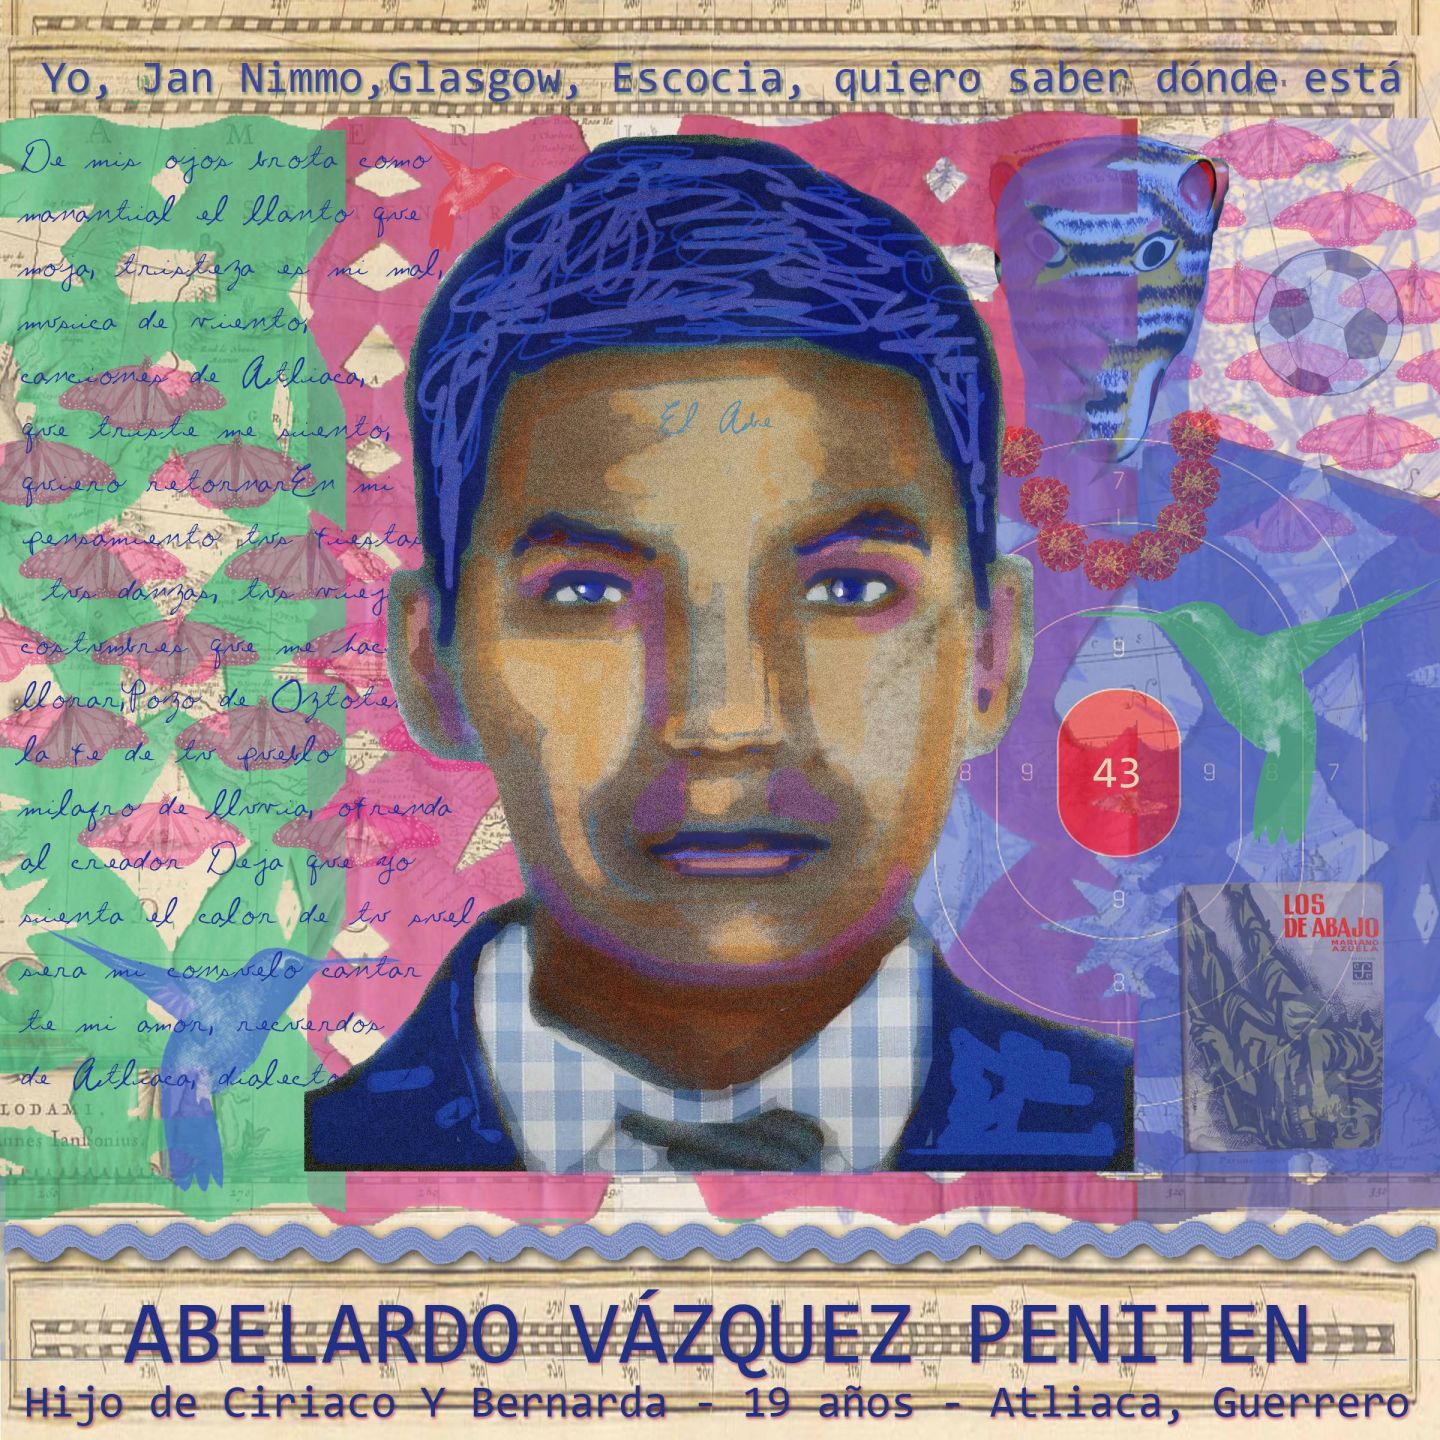 Abelardo Vazquez Peniten portrait by Jan Nimo